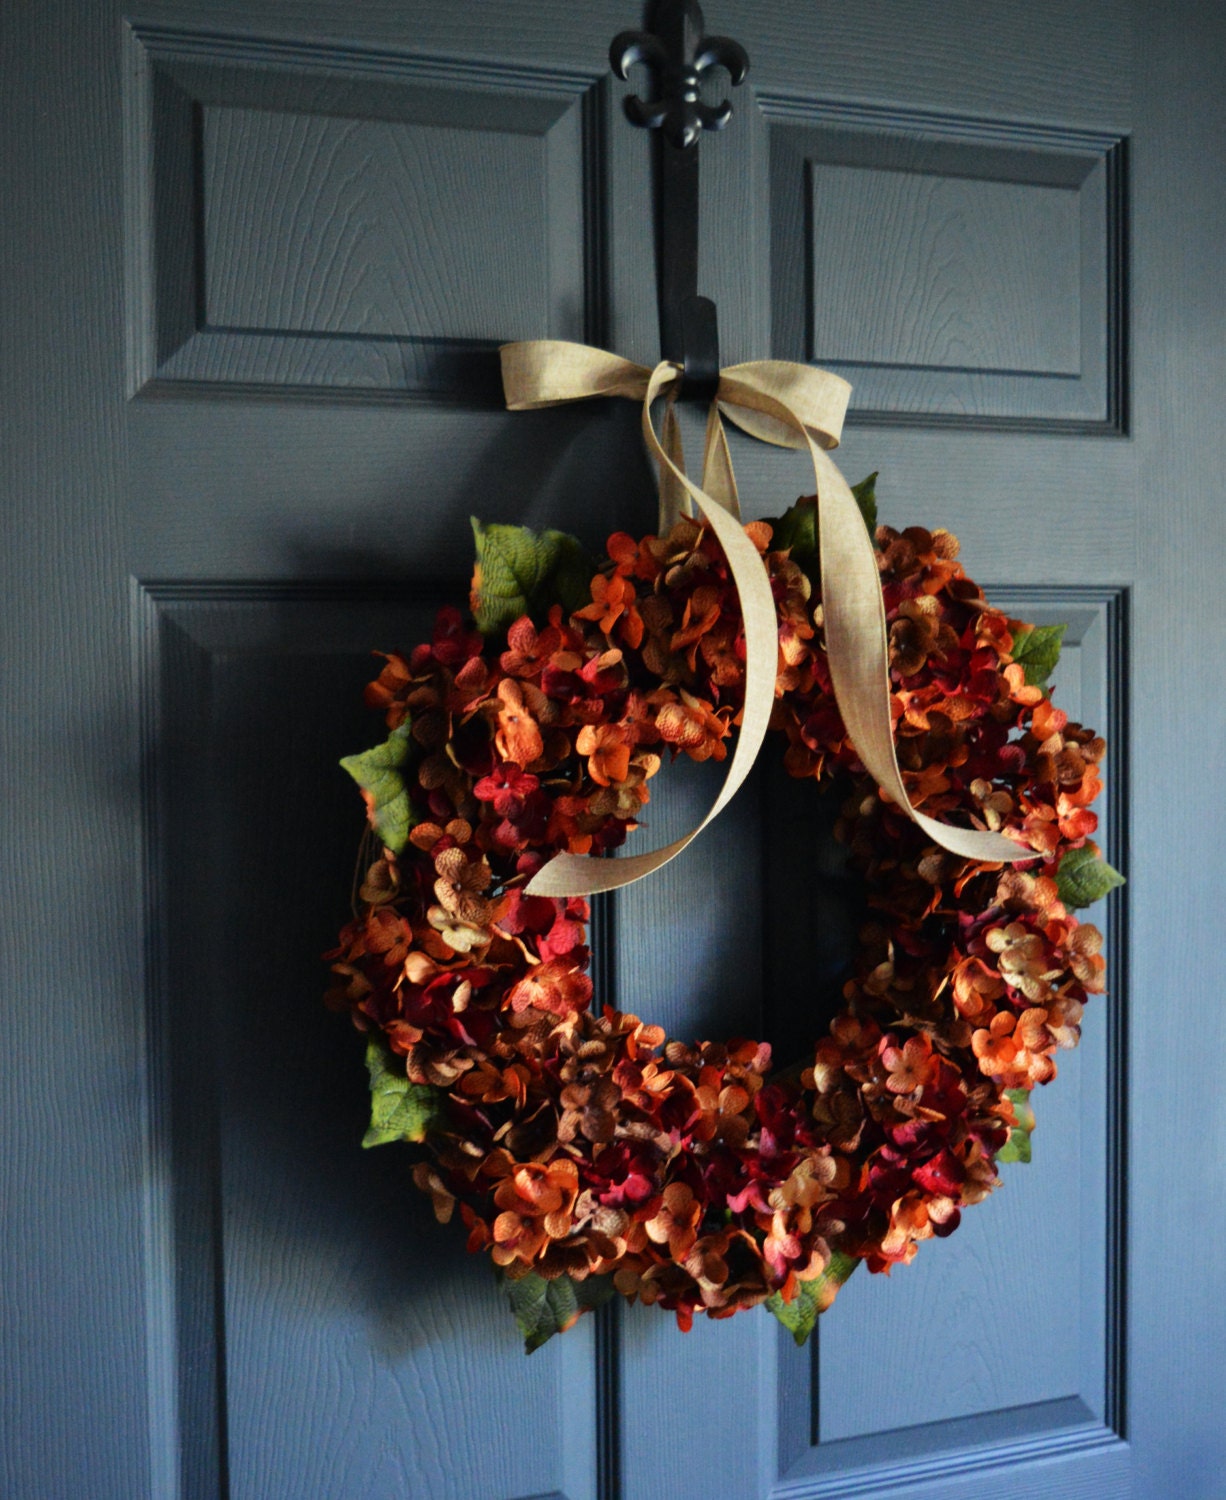 How to Make a DIY Hydrangea Wreath for Fall (An Easy Fall Decor Idea) -  Jenna Kate at Home